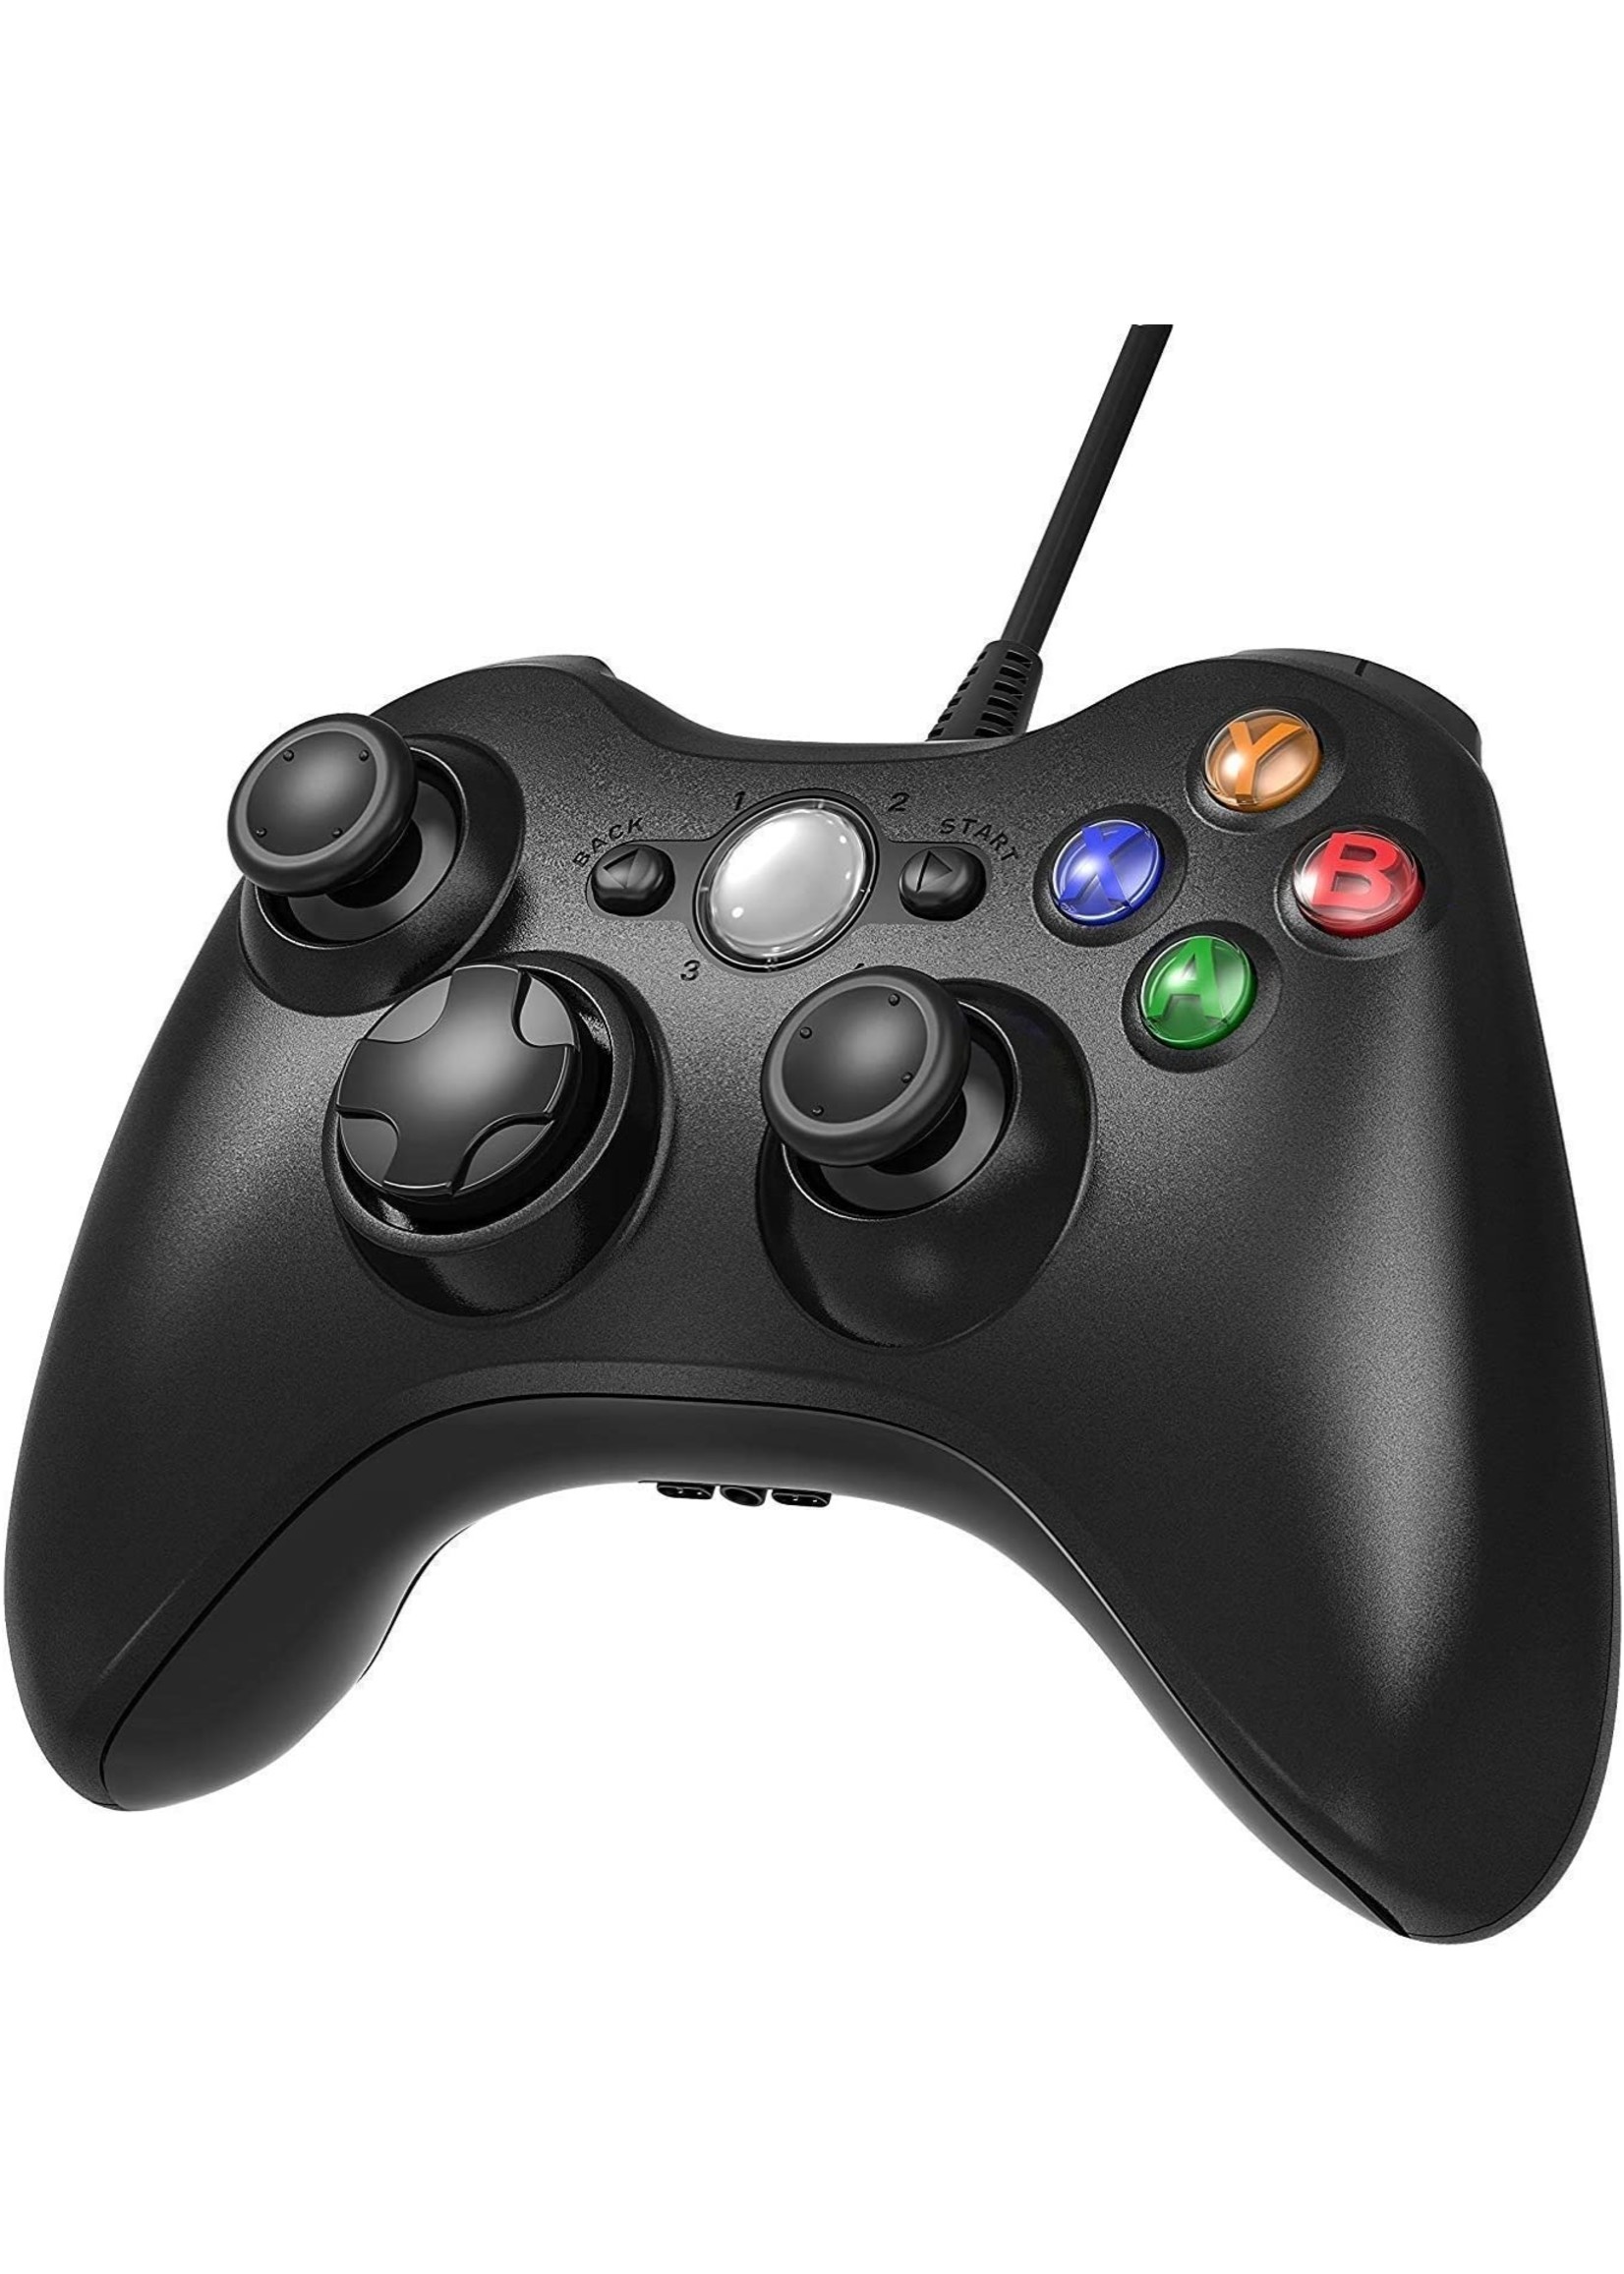 X360 геймпад. Проводной контроллер Xbox 360. Джойстик Xbox 360 беспроводной. Microsoft Xbox 360 Wireless Controller. Xbox 360 с одним джойстиком.